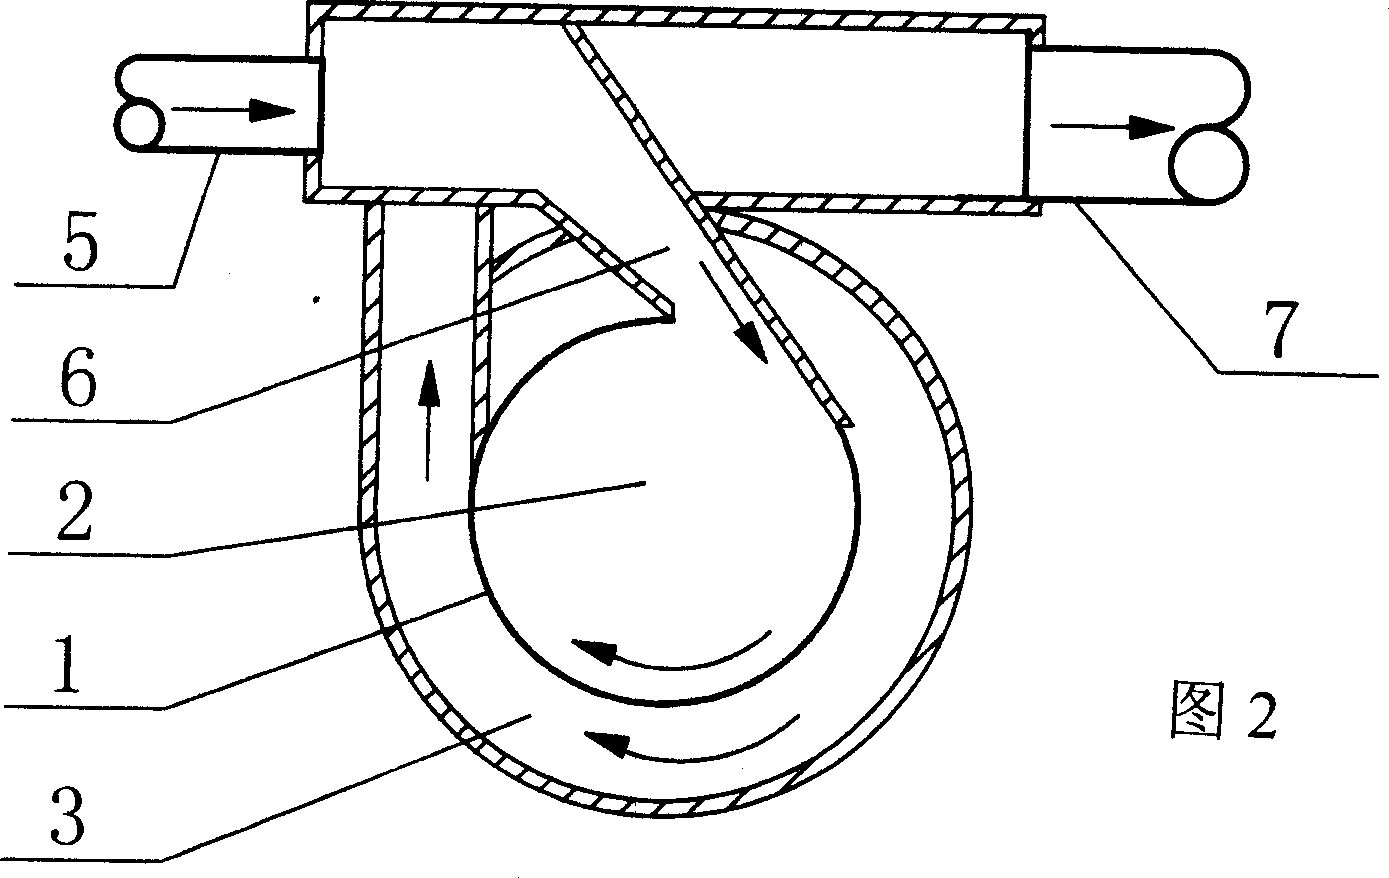 Cross current swirl type solid-liquid separation device